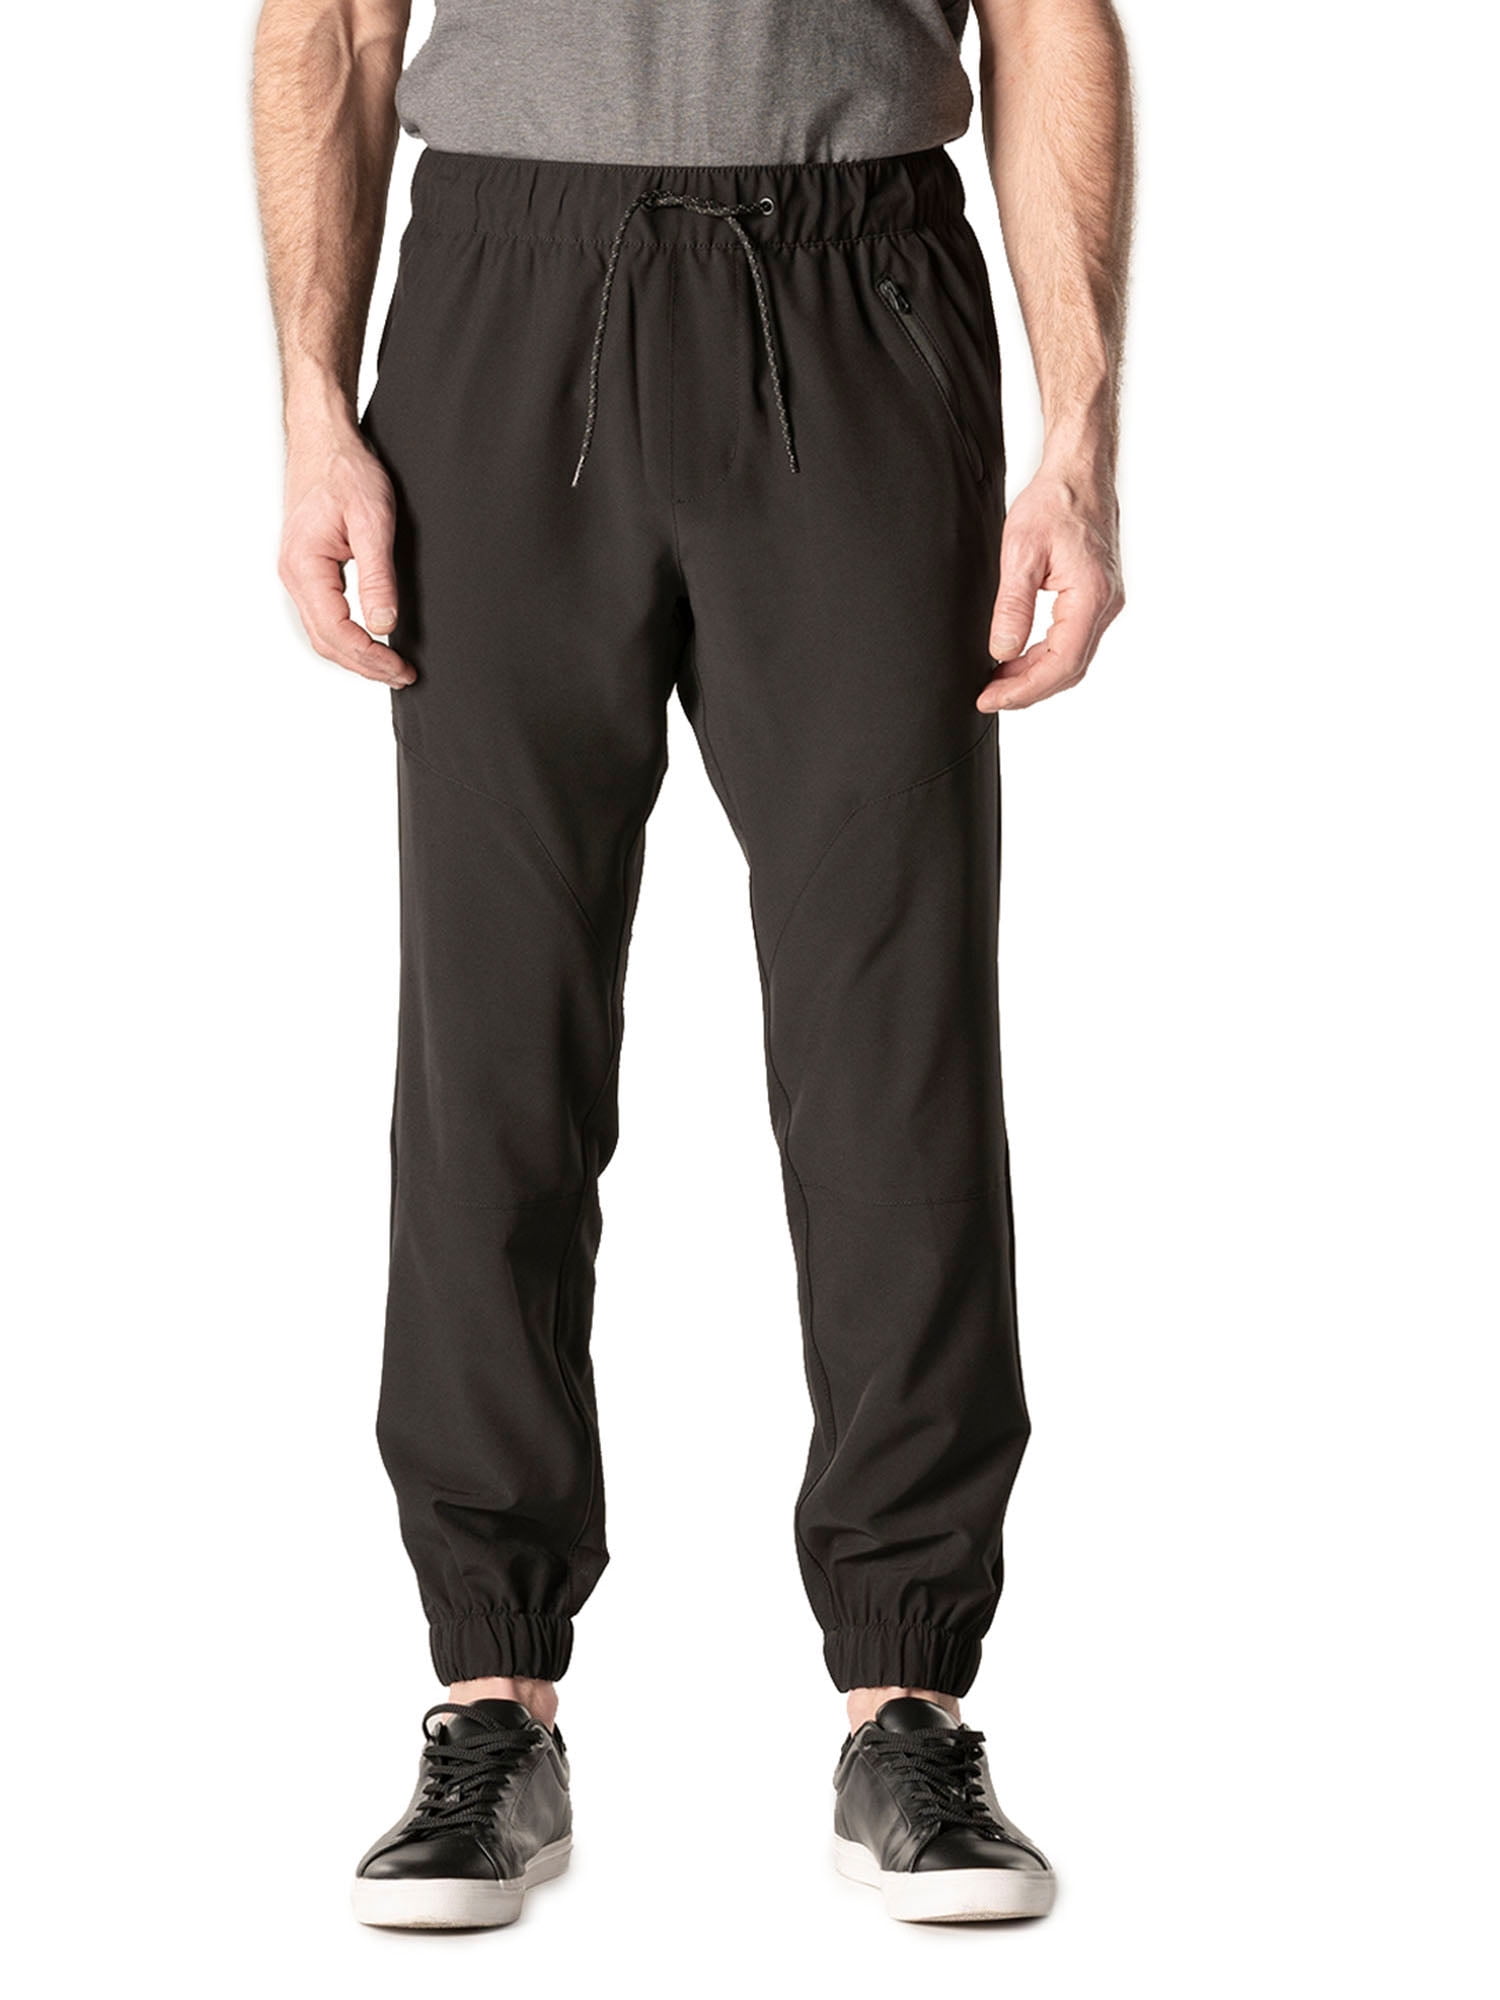 IRON Clothing Men's Gaskin Stretch Tech Jogger - Walmart.com